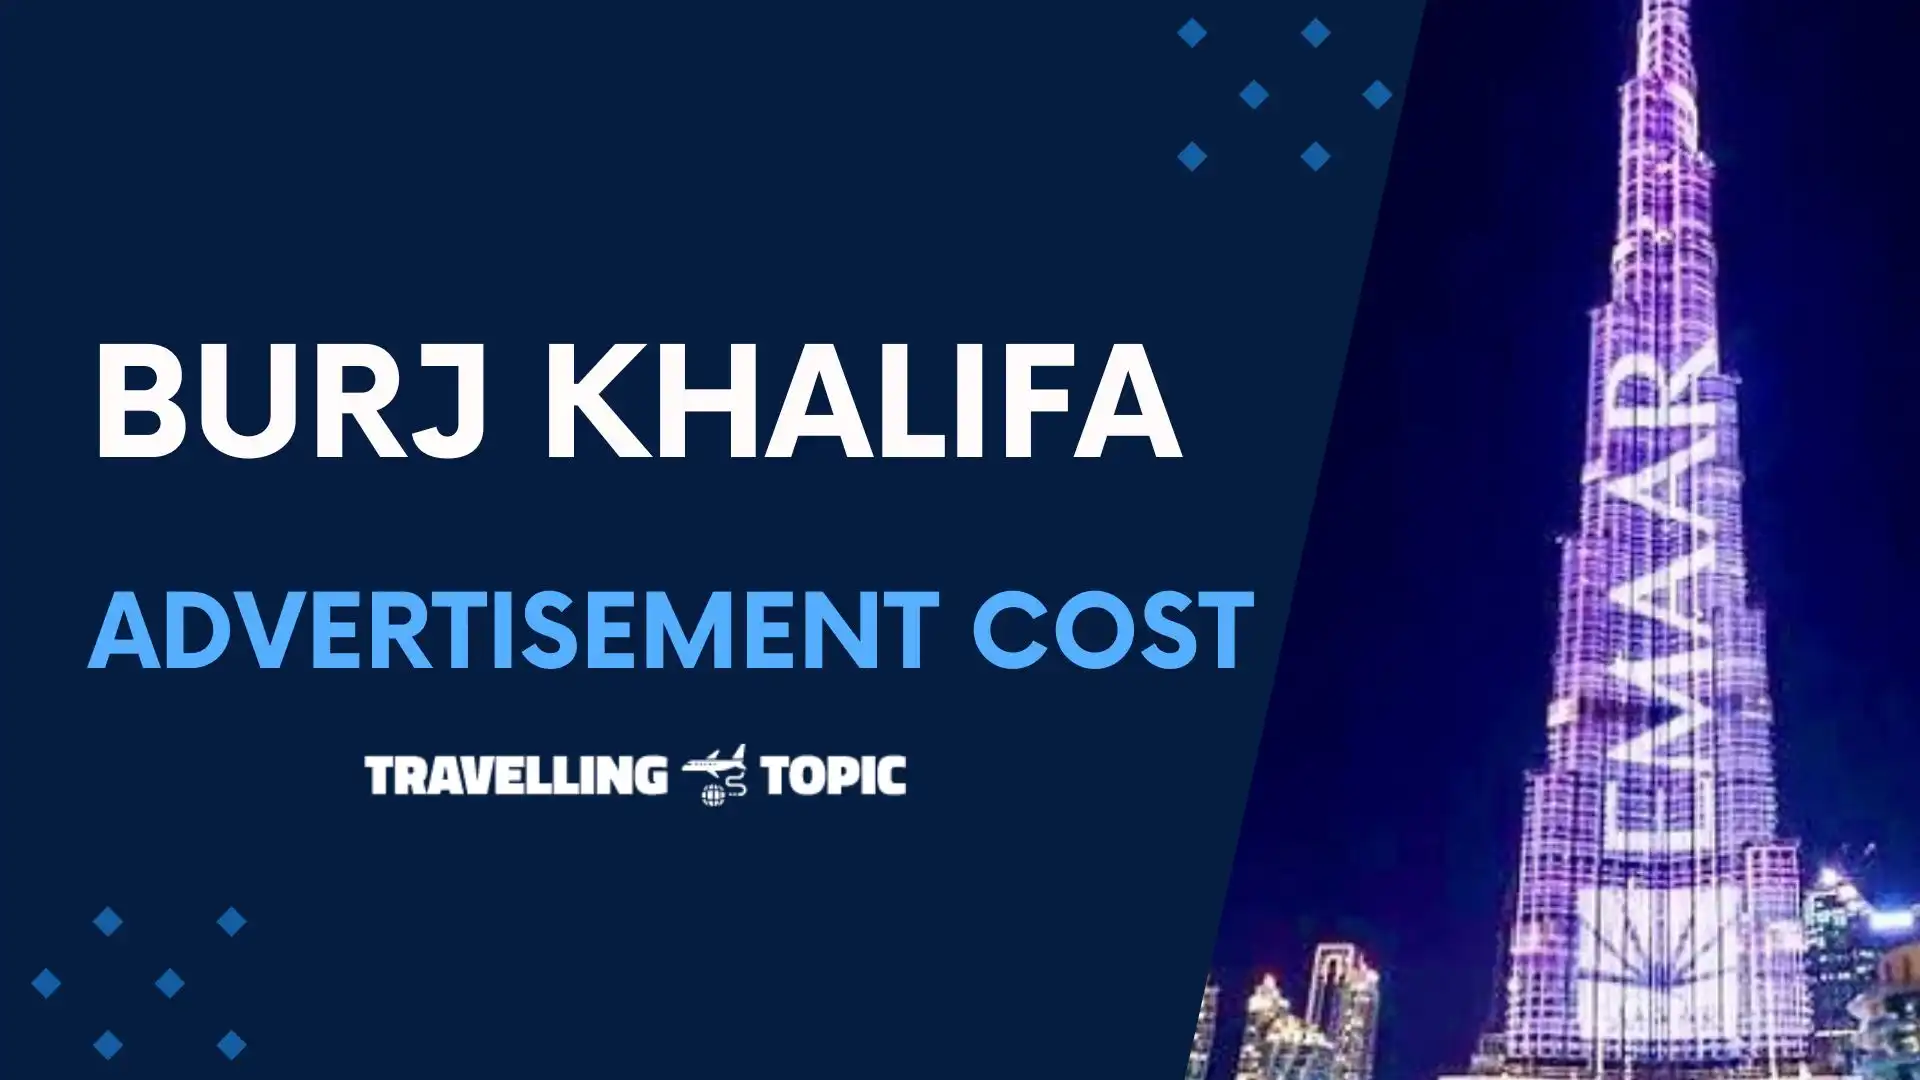 burj khalifa advertisement cost